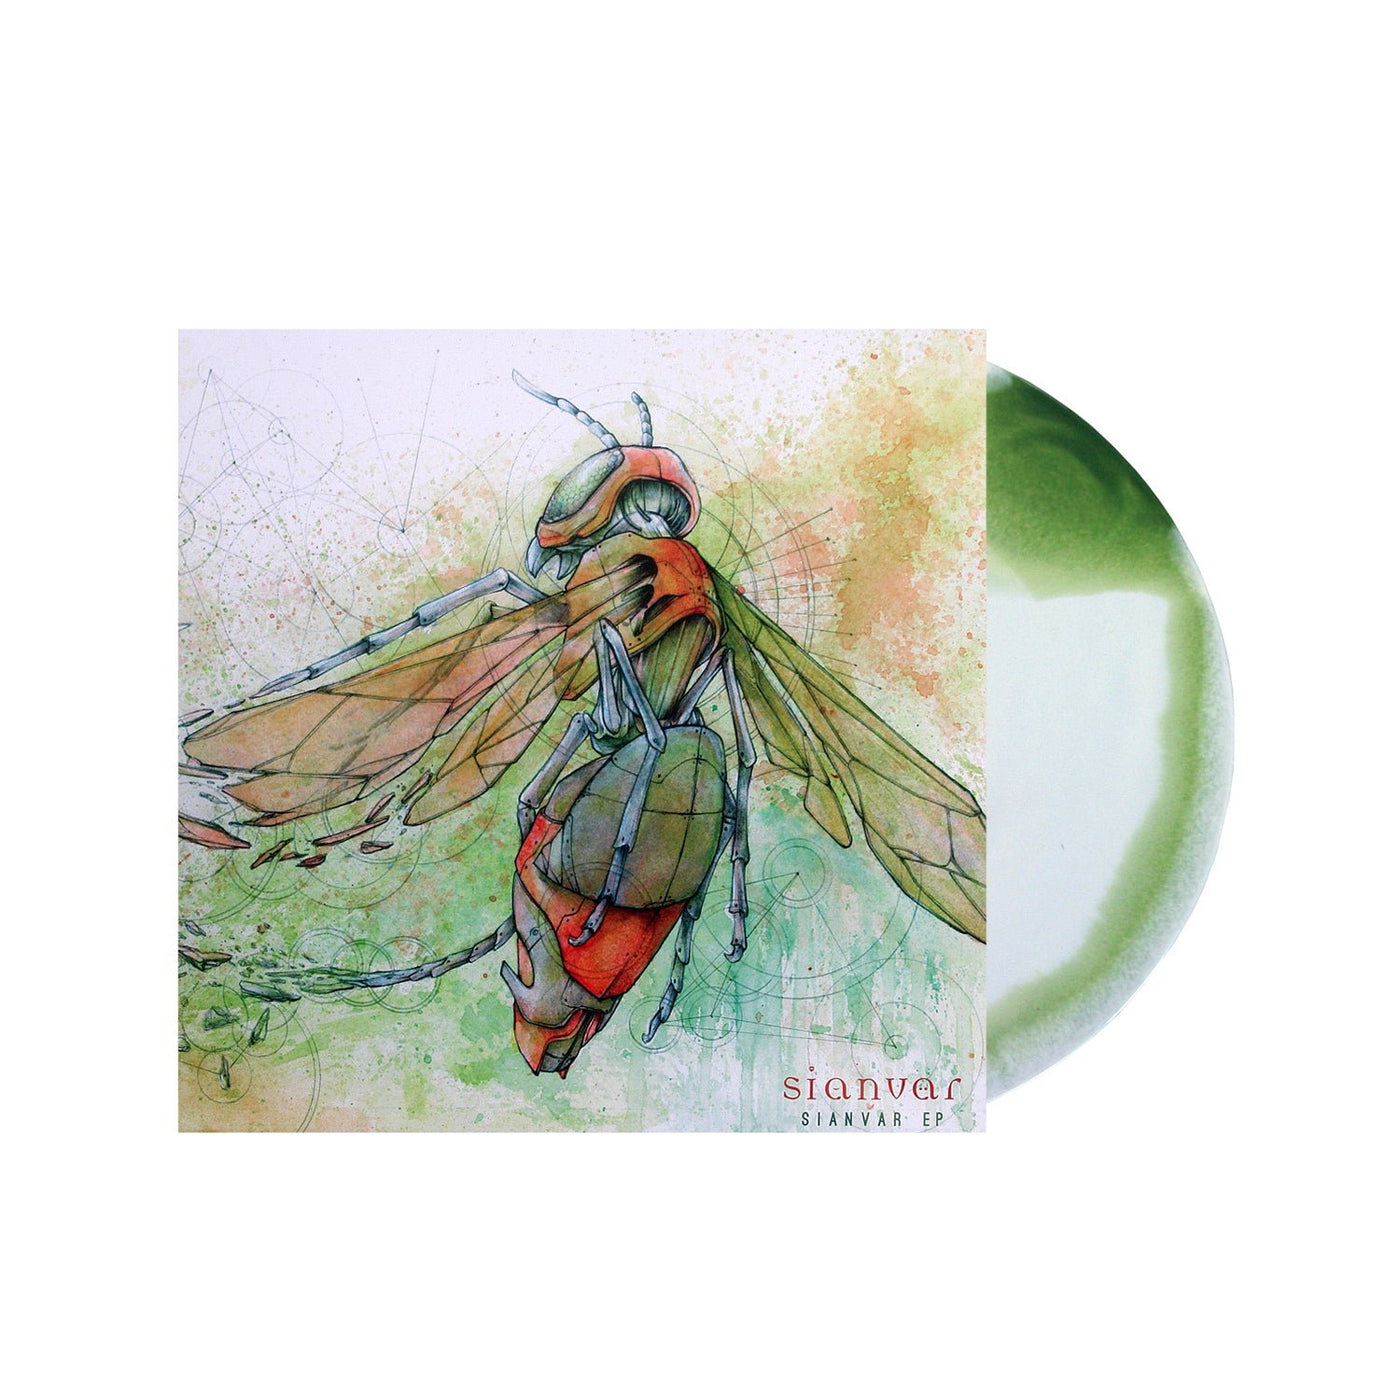 Self-Titled Bone & Olive Green Smush Vinyl LP